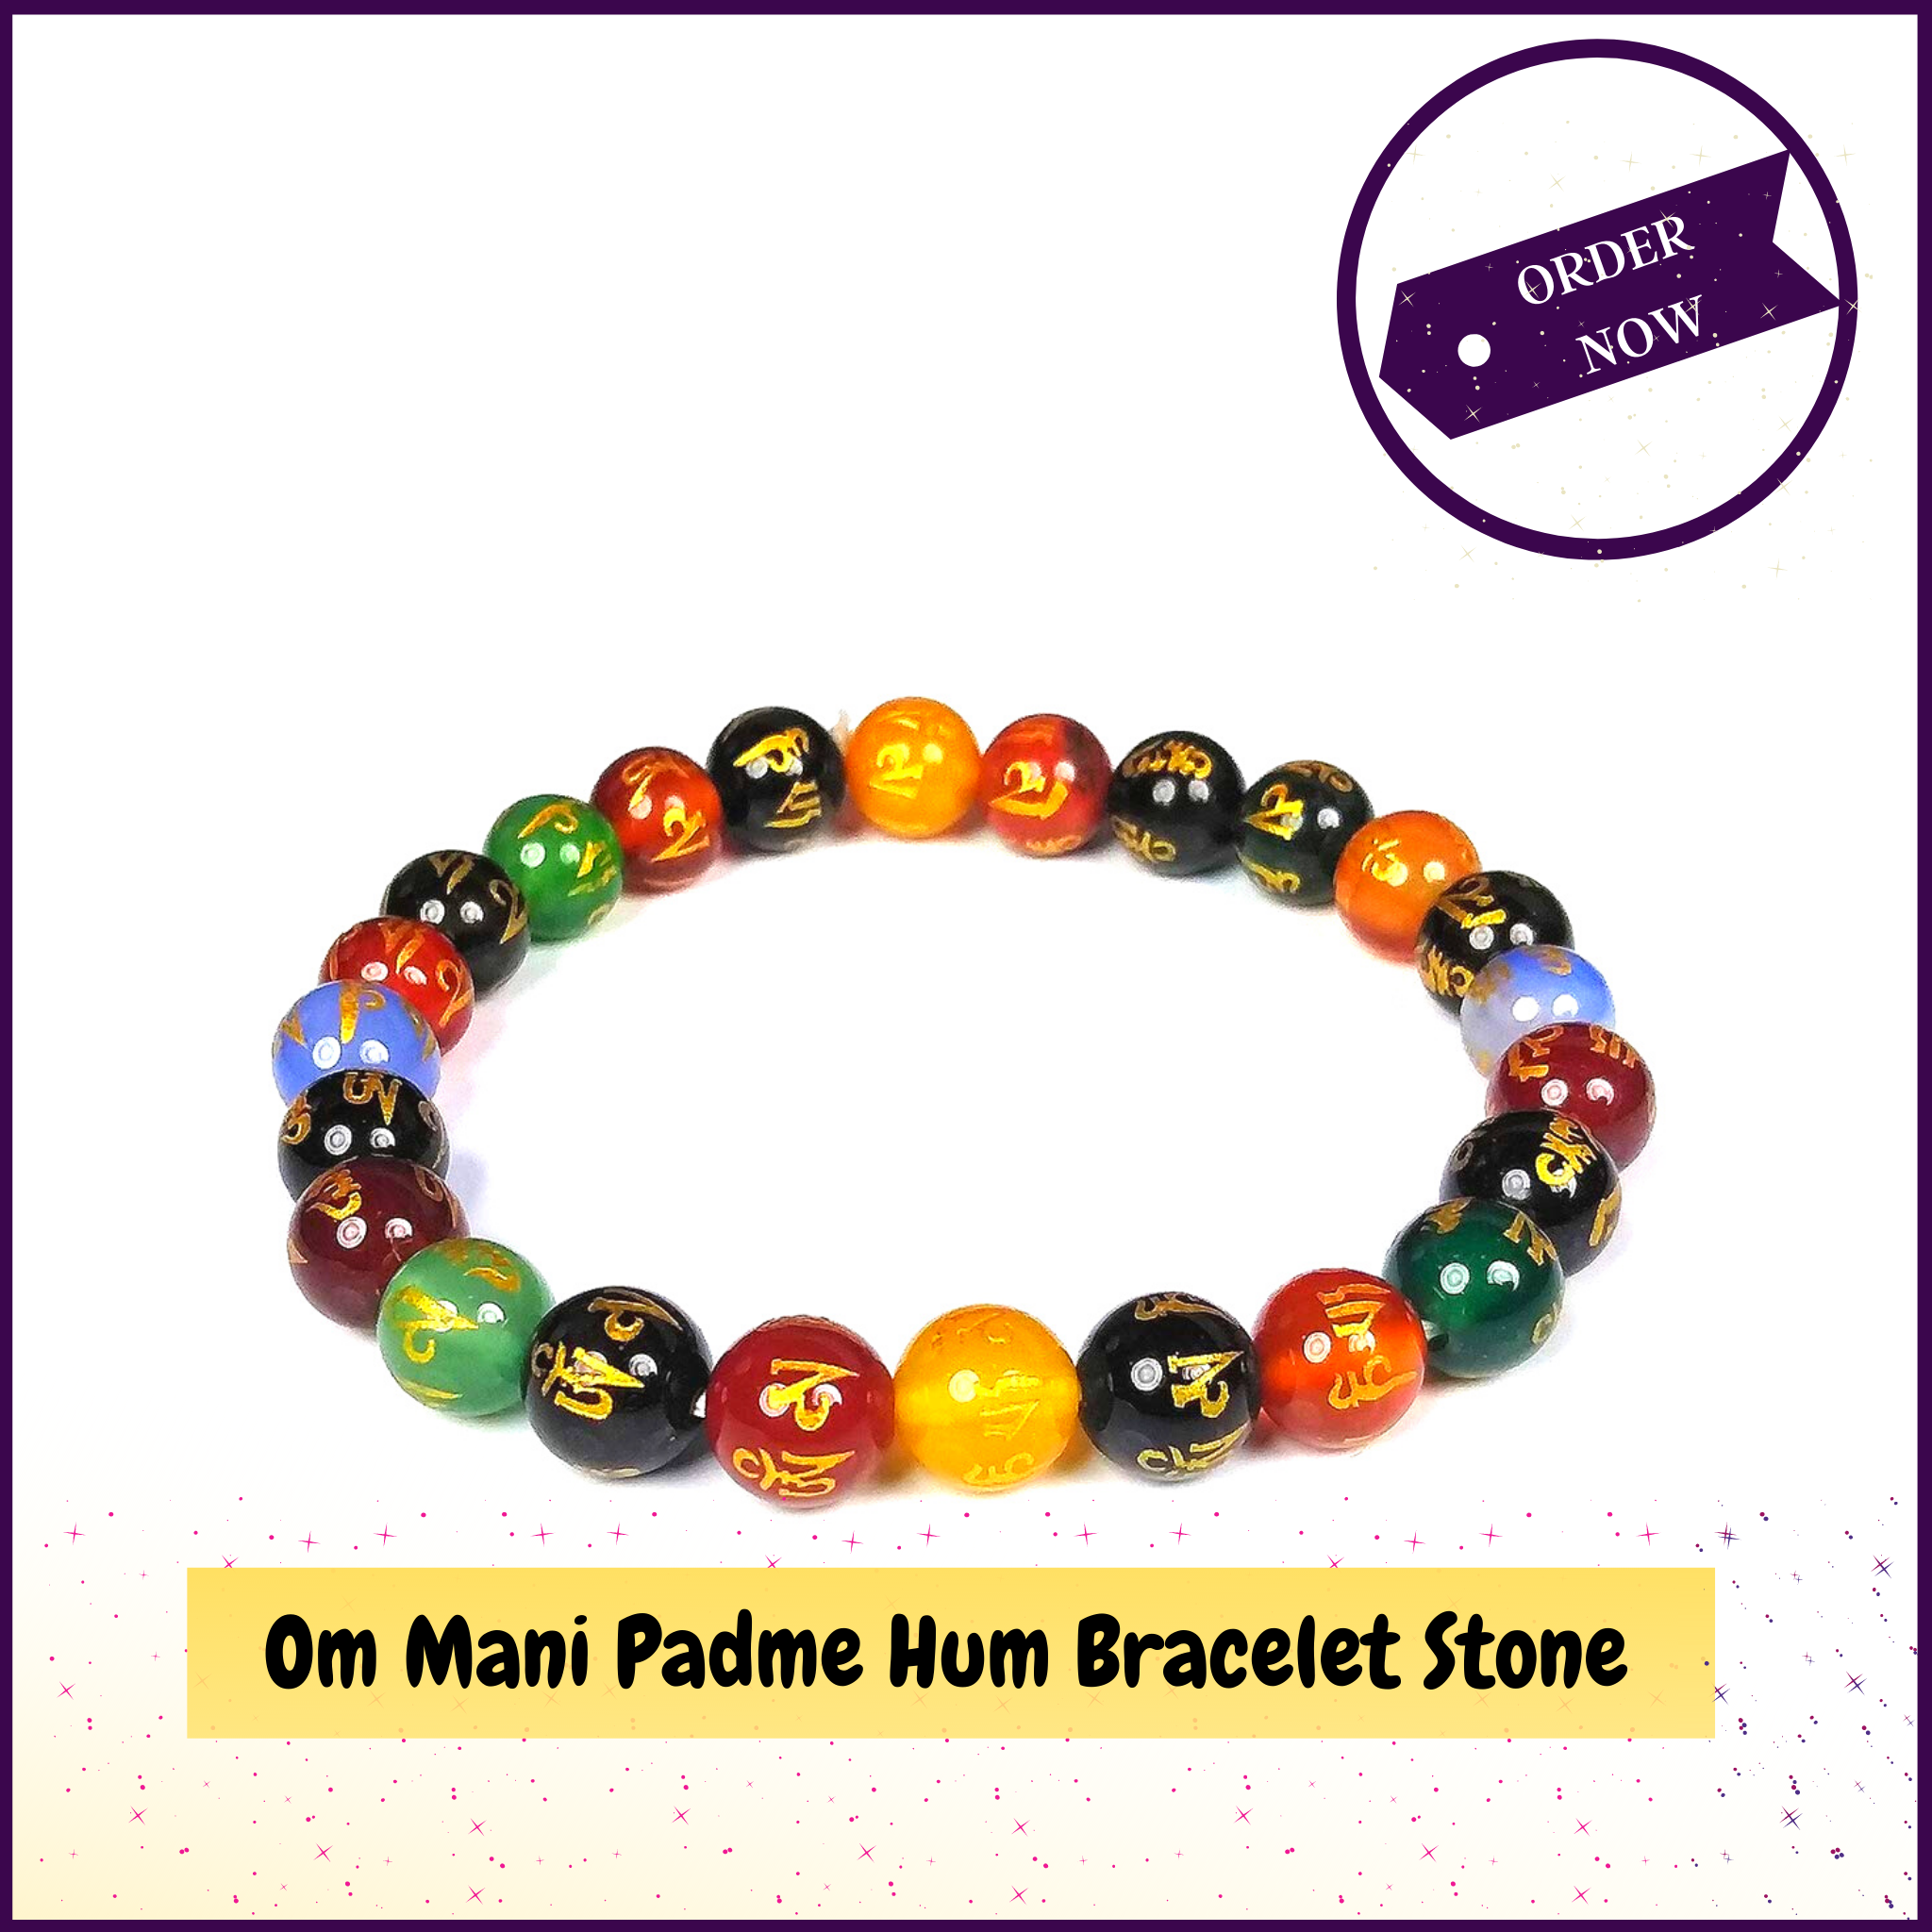 Om Mani Padme Hum Bracelet Crystal Helps Attain Enlightenment - 51pyramids